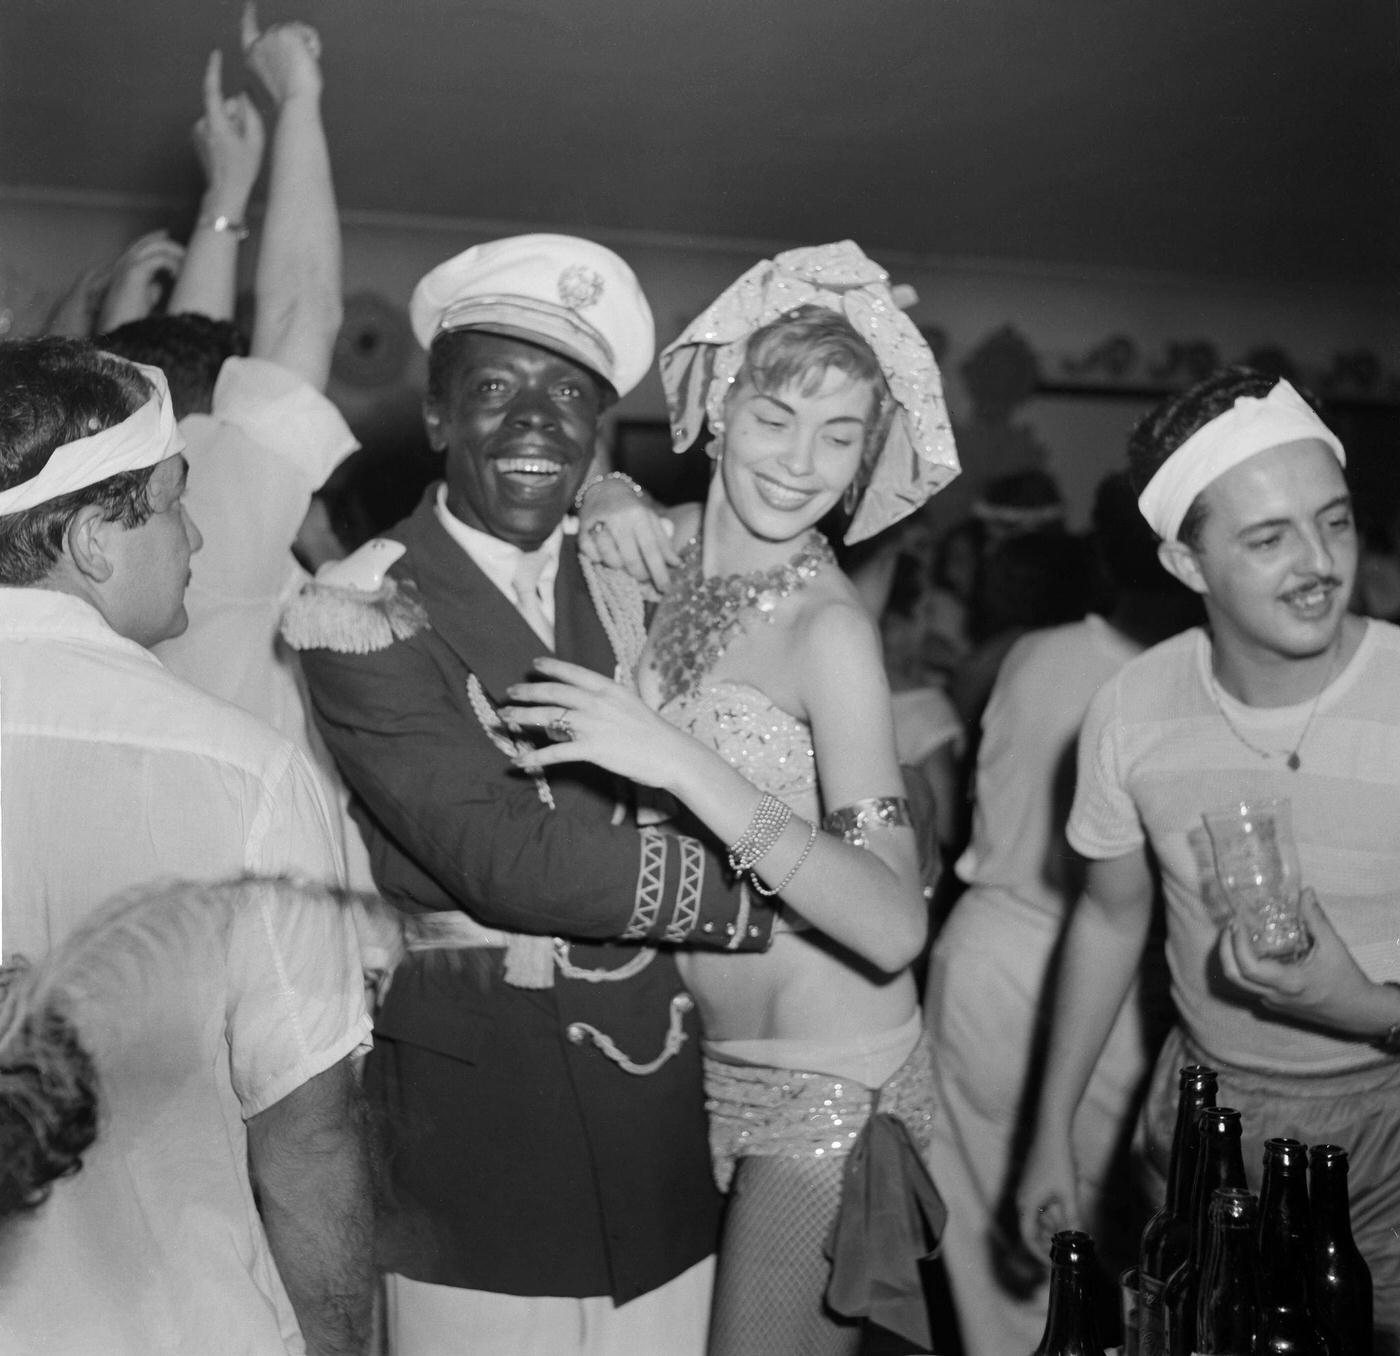 Costume Party at Carnival, Rio De Janeiro, Brazil 1953